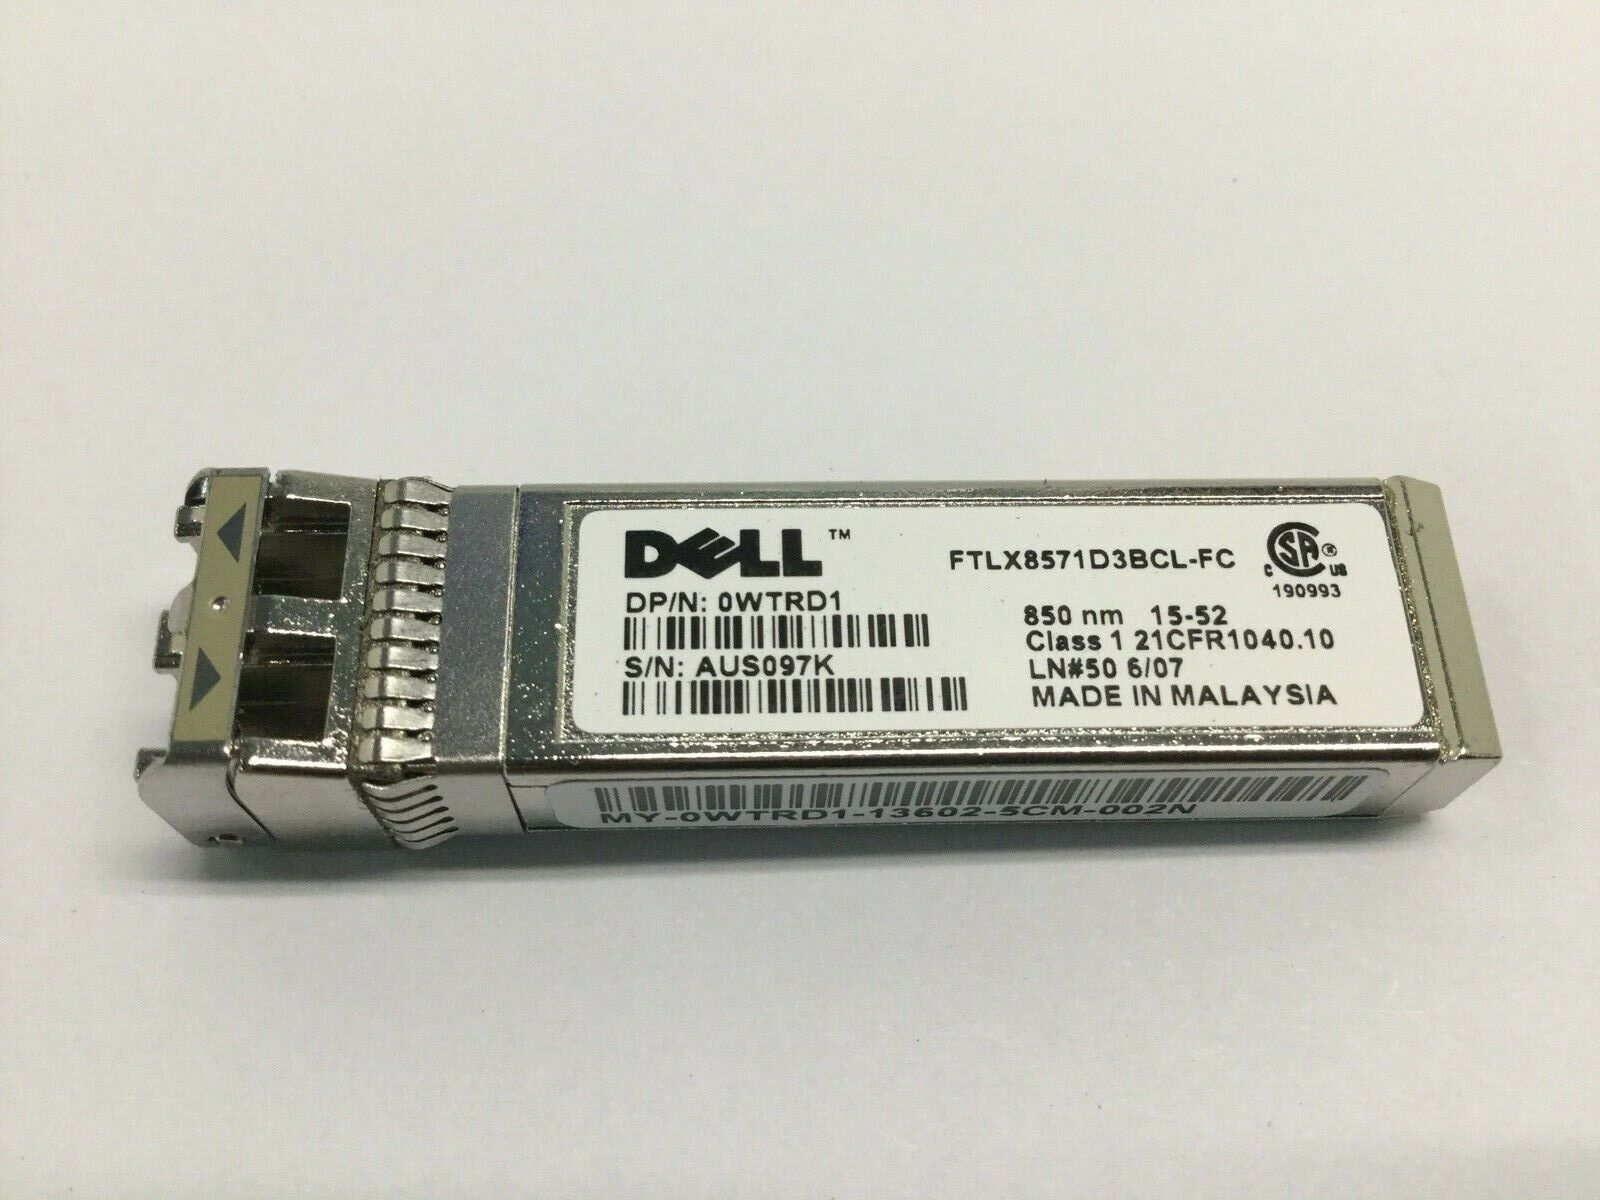 DELL FTLX8571D3BCL 10GB SFP+ Optic Transceiver SFP-10G-SR 850nm (ASSORTED)